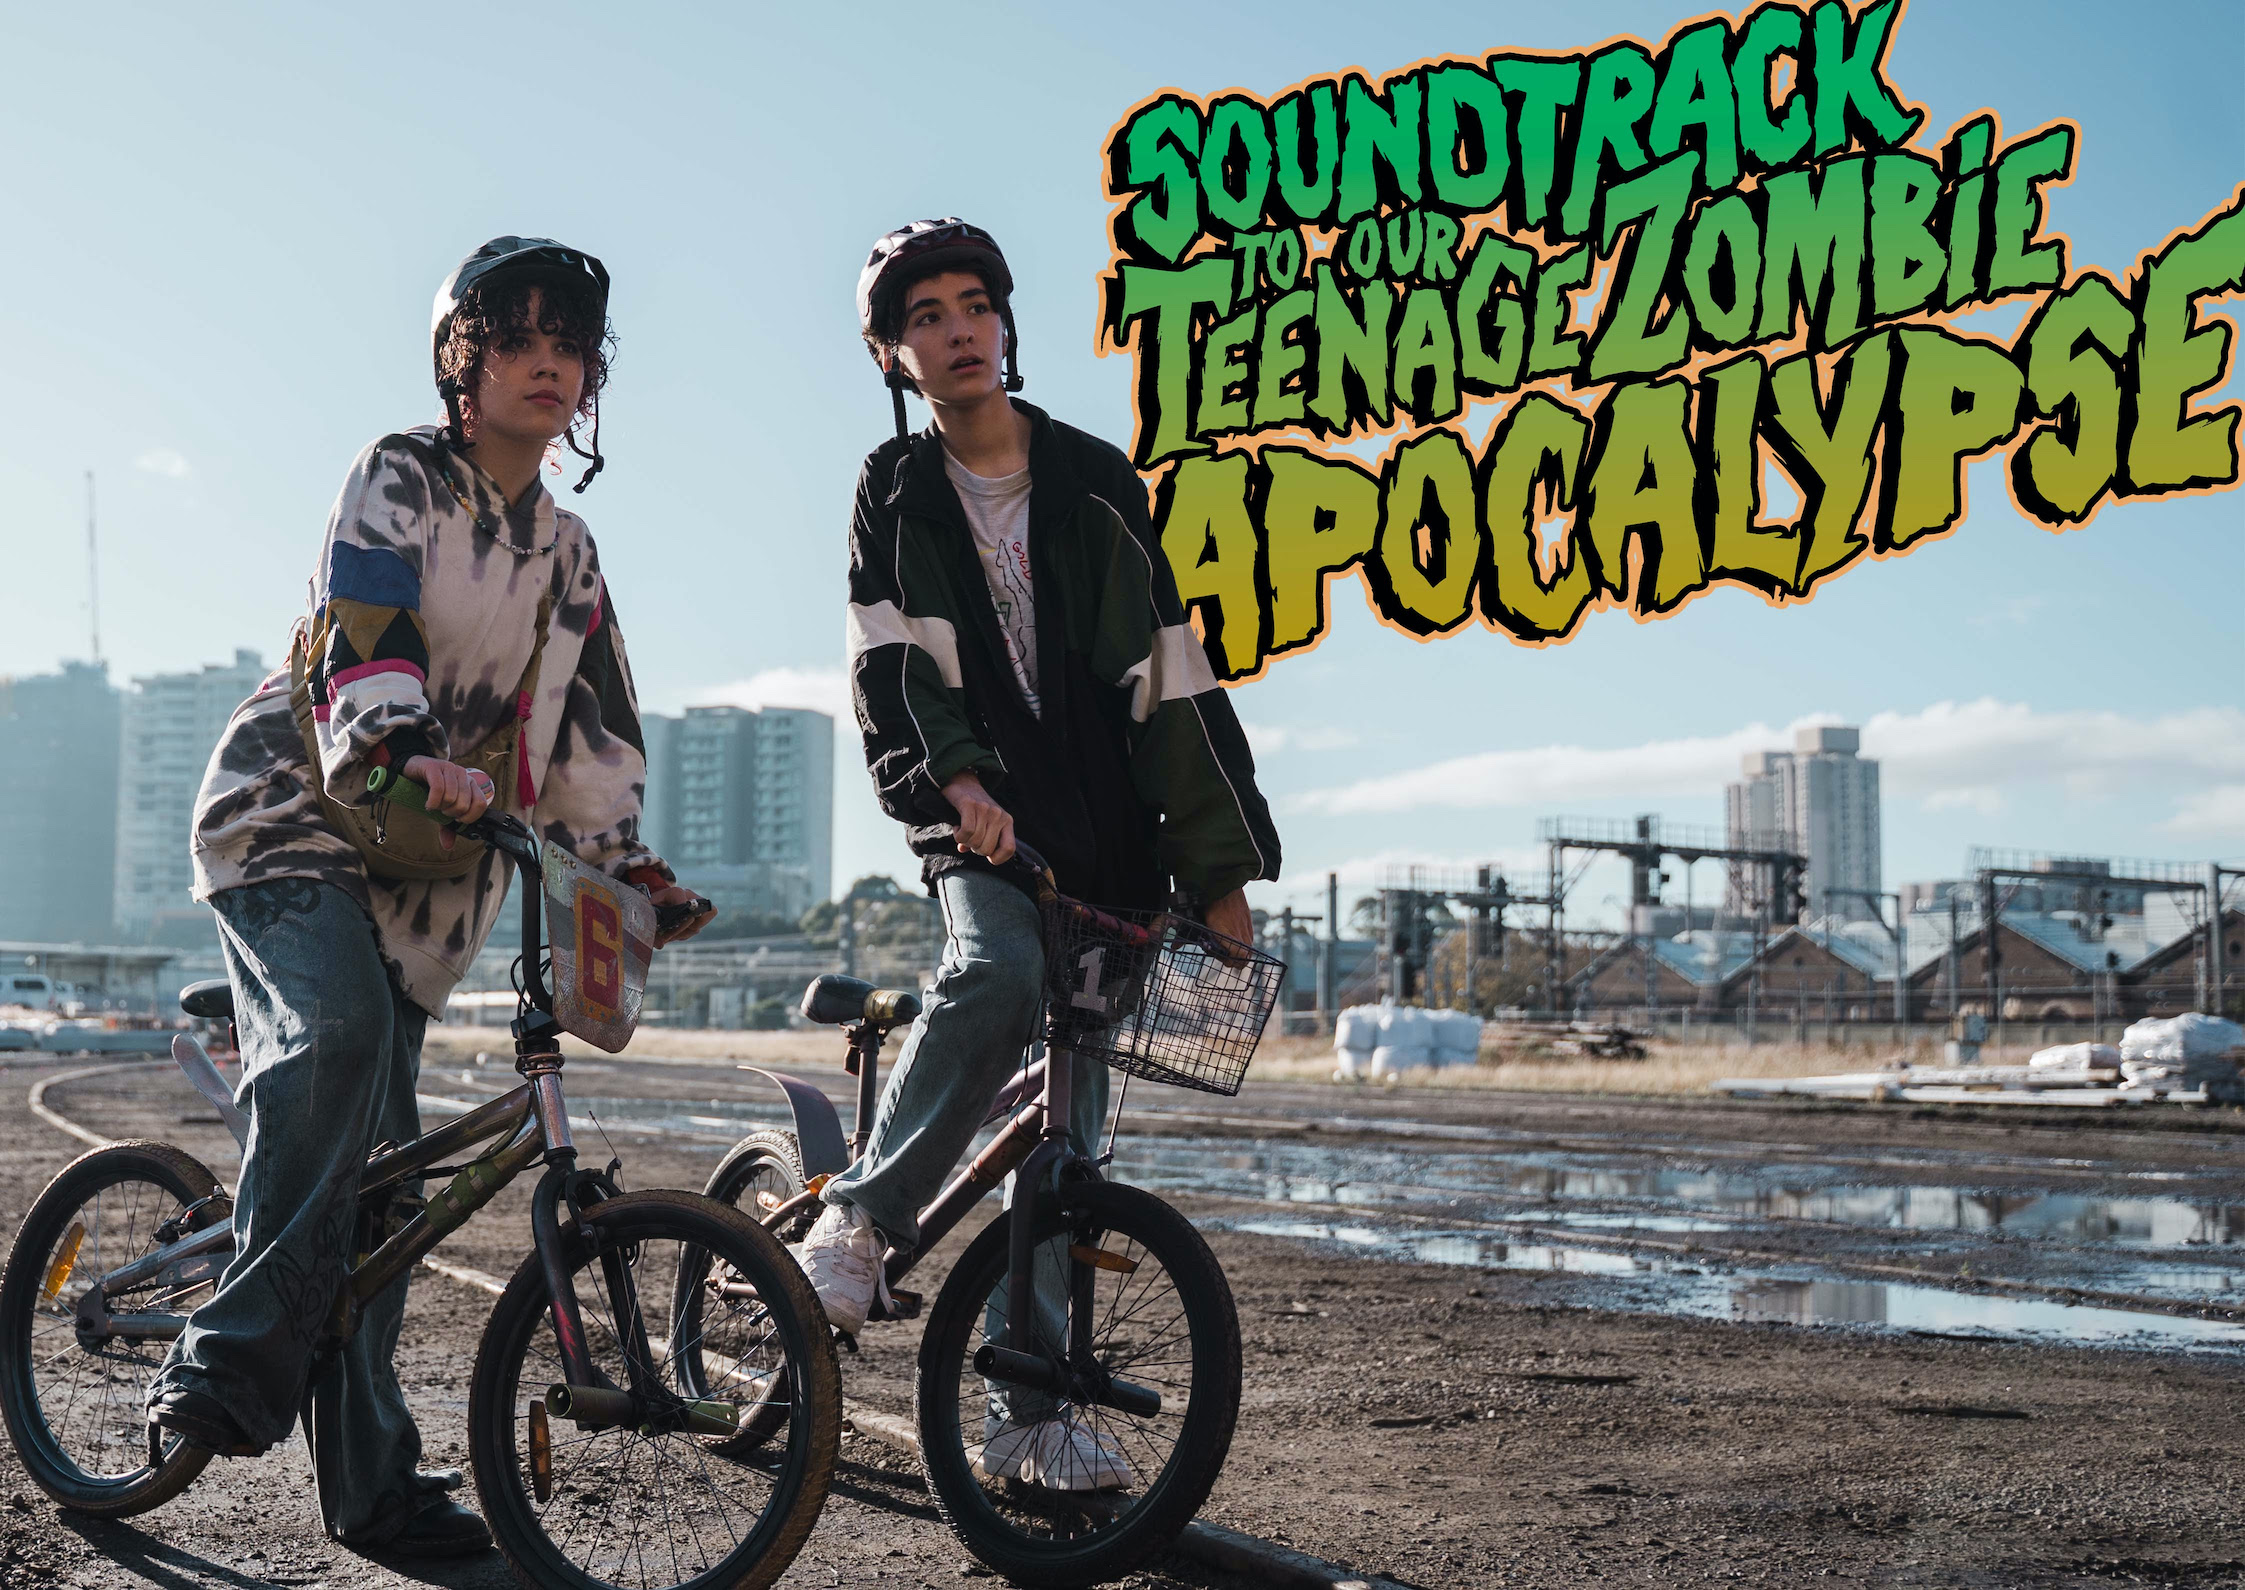 Soundtrack To Our Zombie Teenage Apocalypse